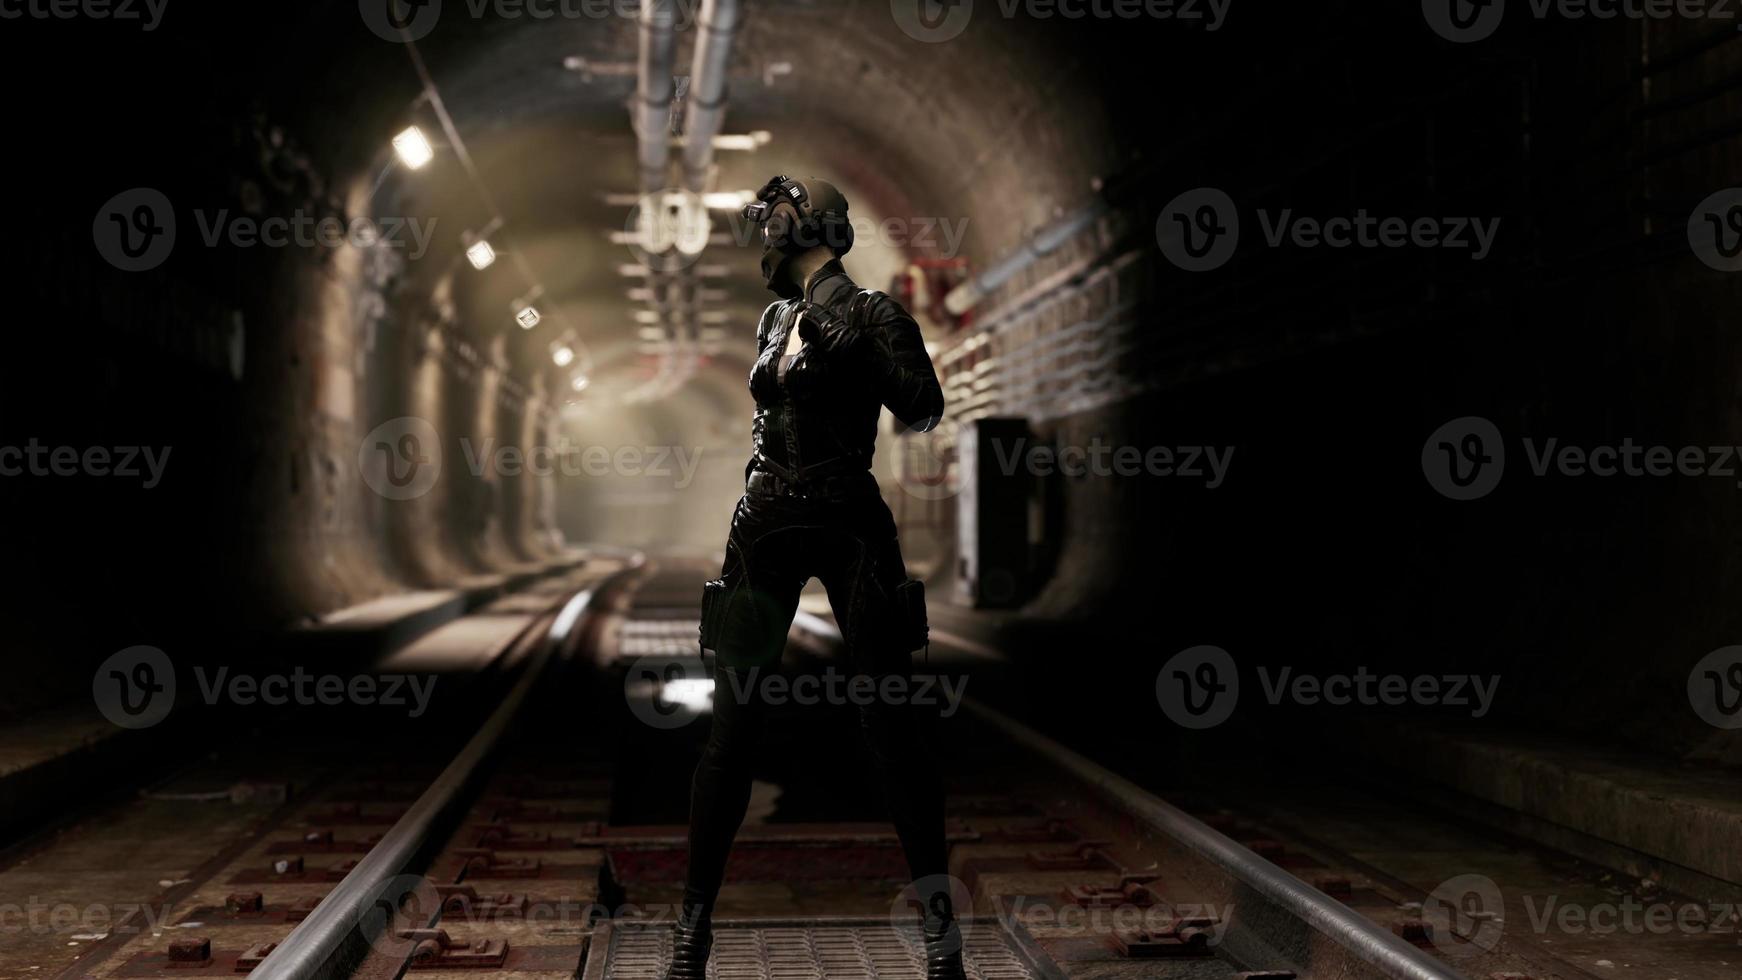 mulher pós-apocalíptica no túnel do metrô foto